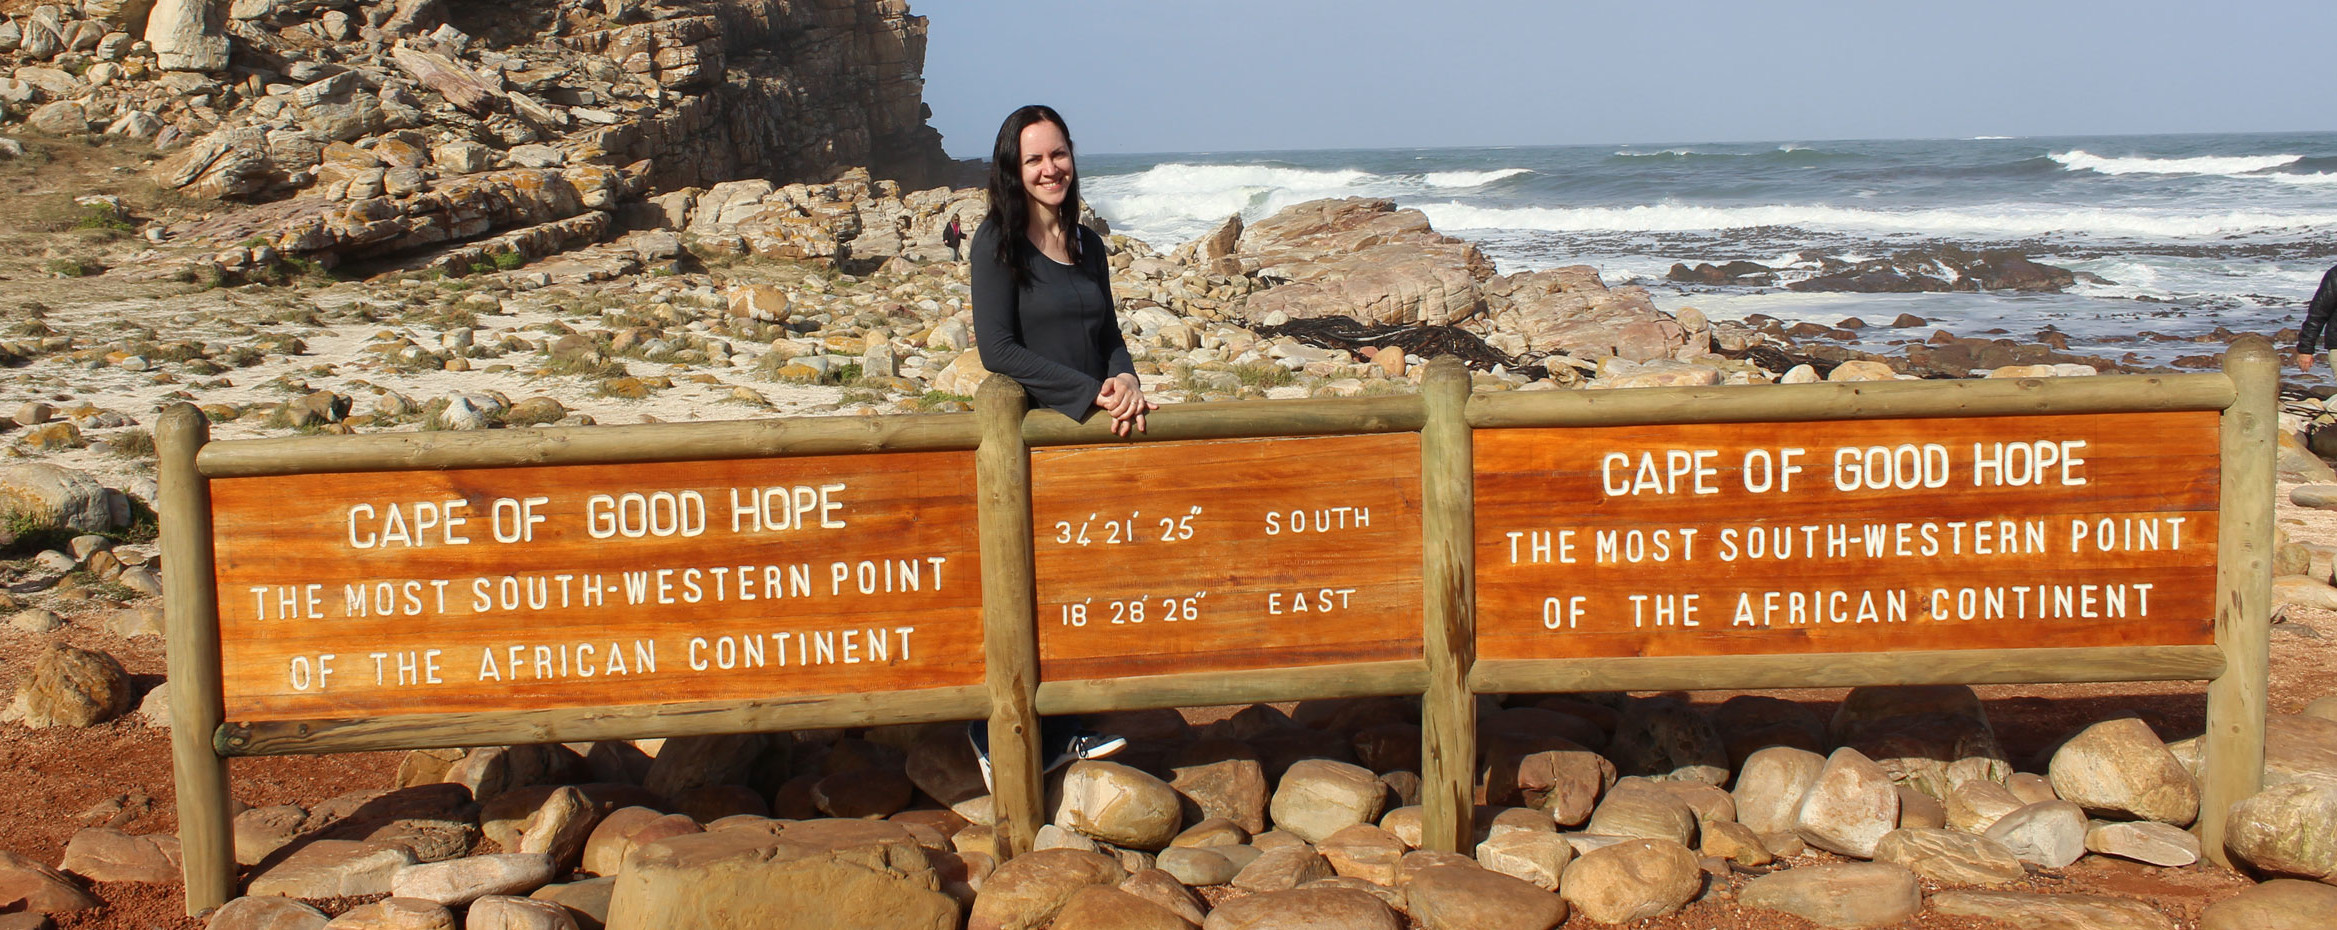 Reisebericht Südafrika - Reiseexpertin Waltraud am Kap der Guten Hoffnung